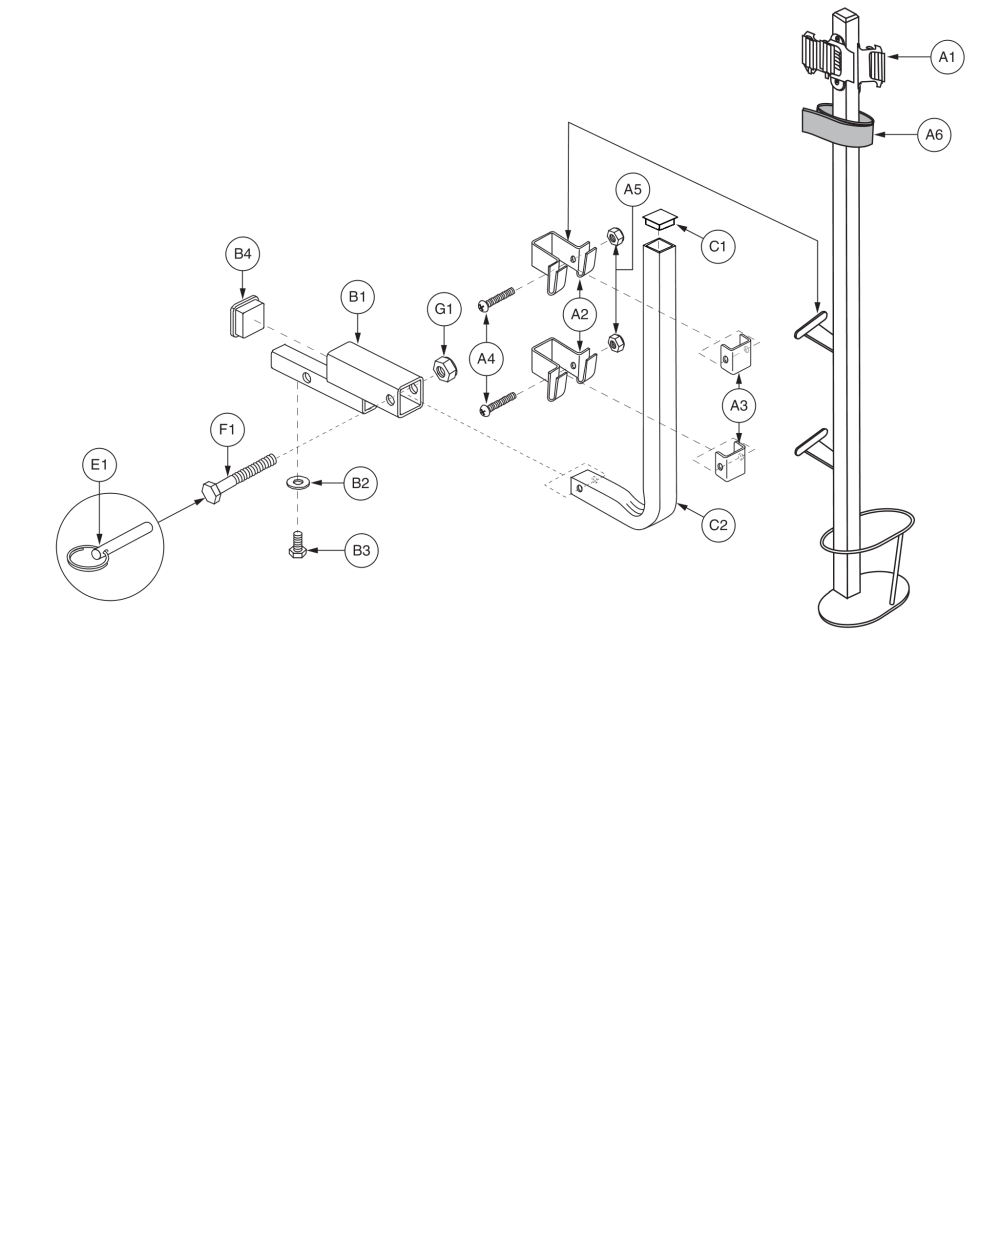 Cane / Crutch Holder - Synergy Seat parts diagram